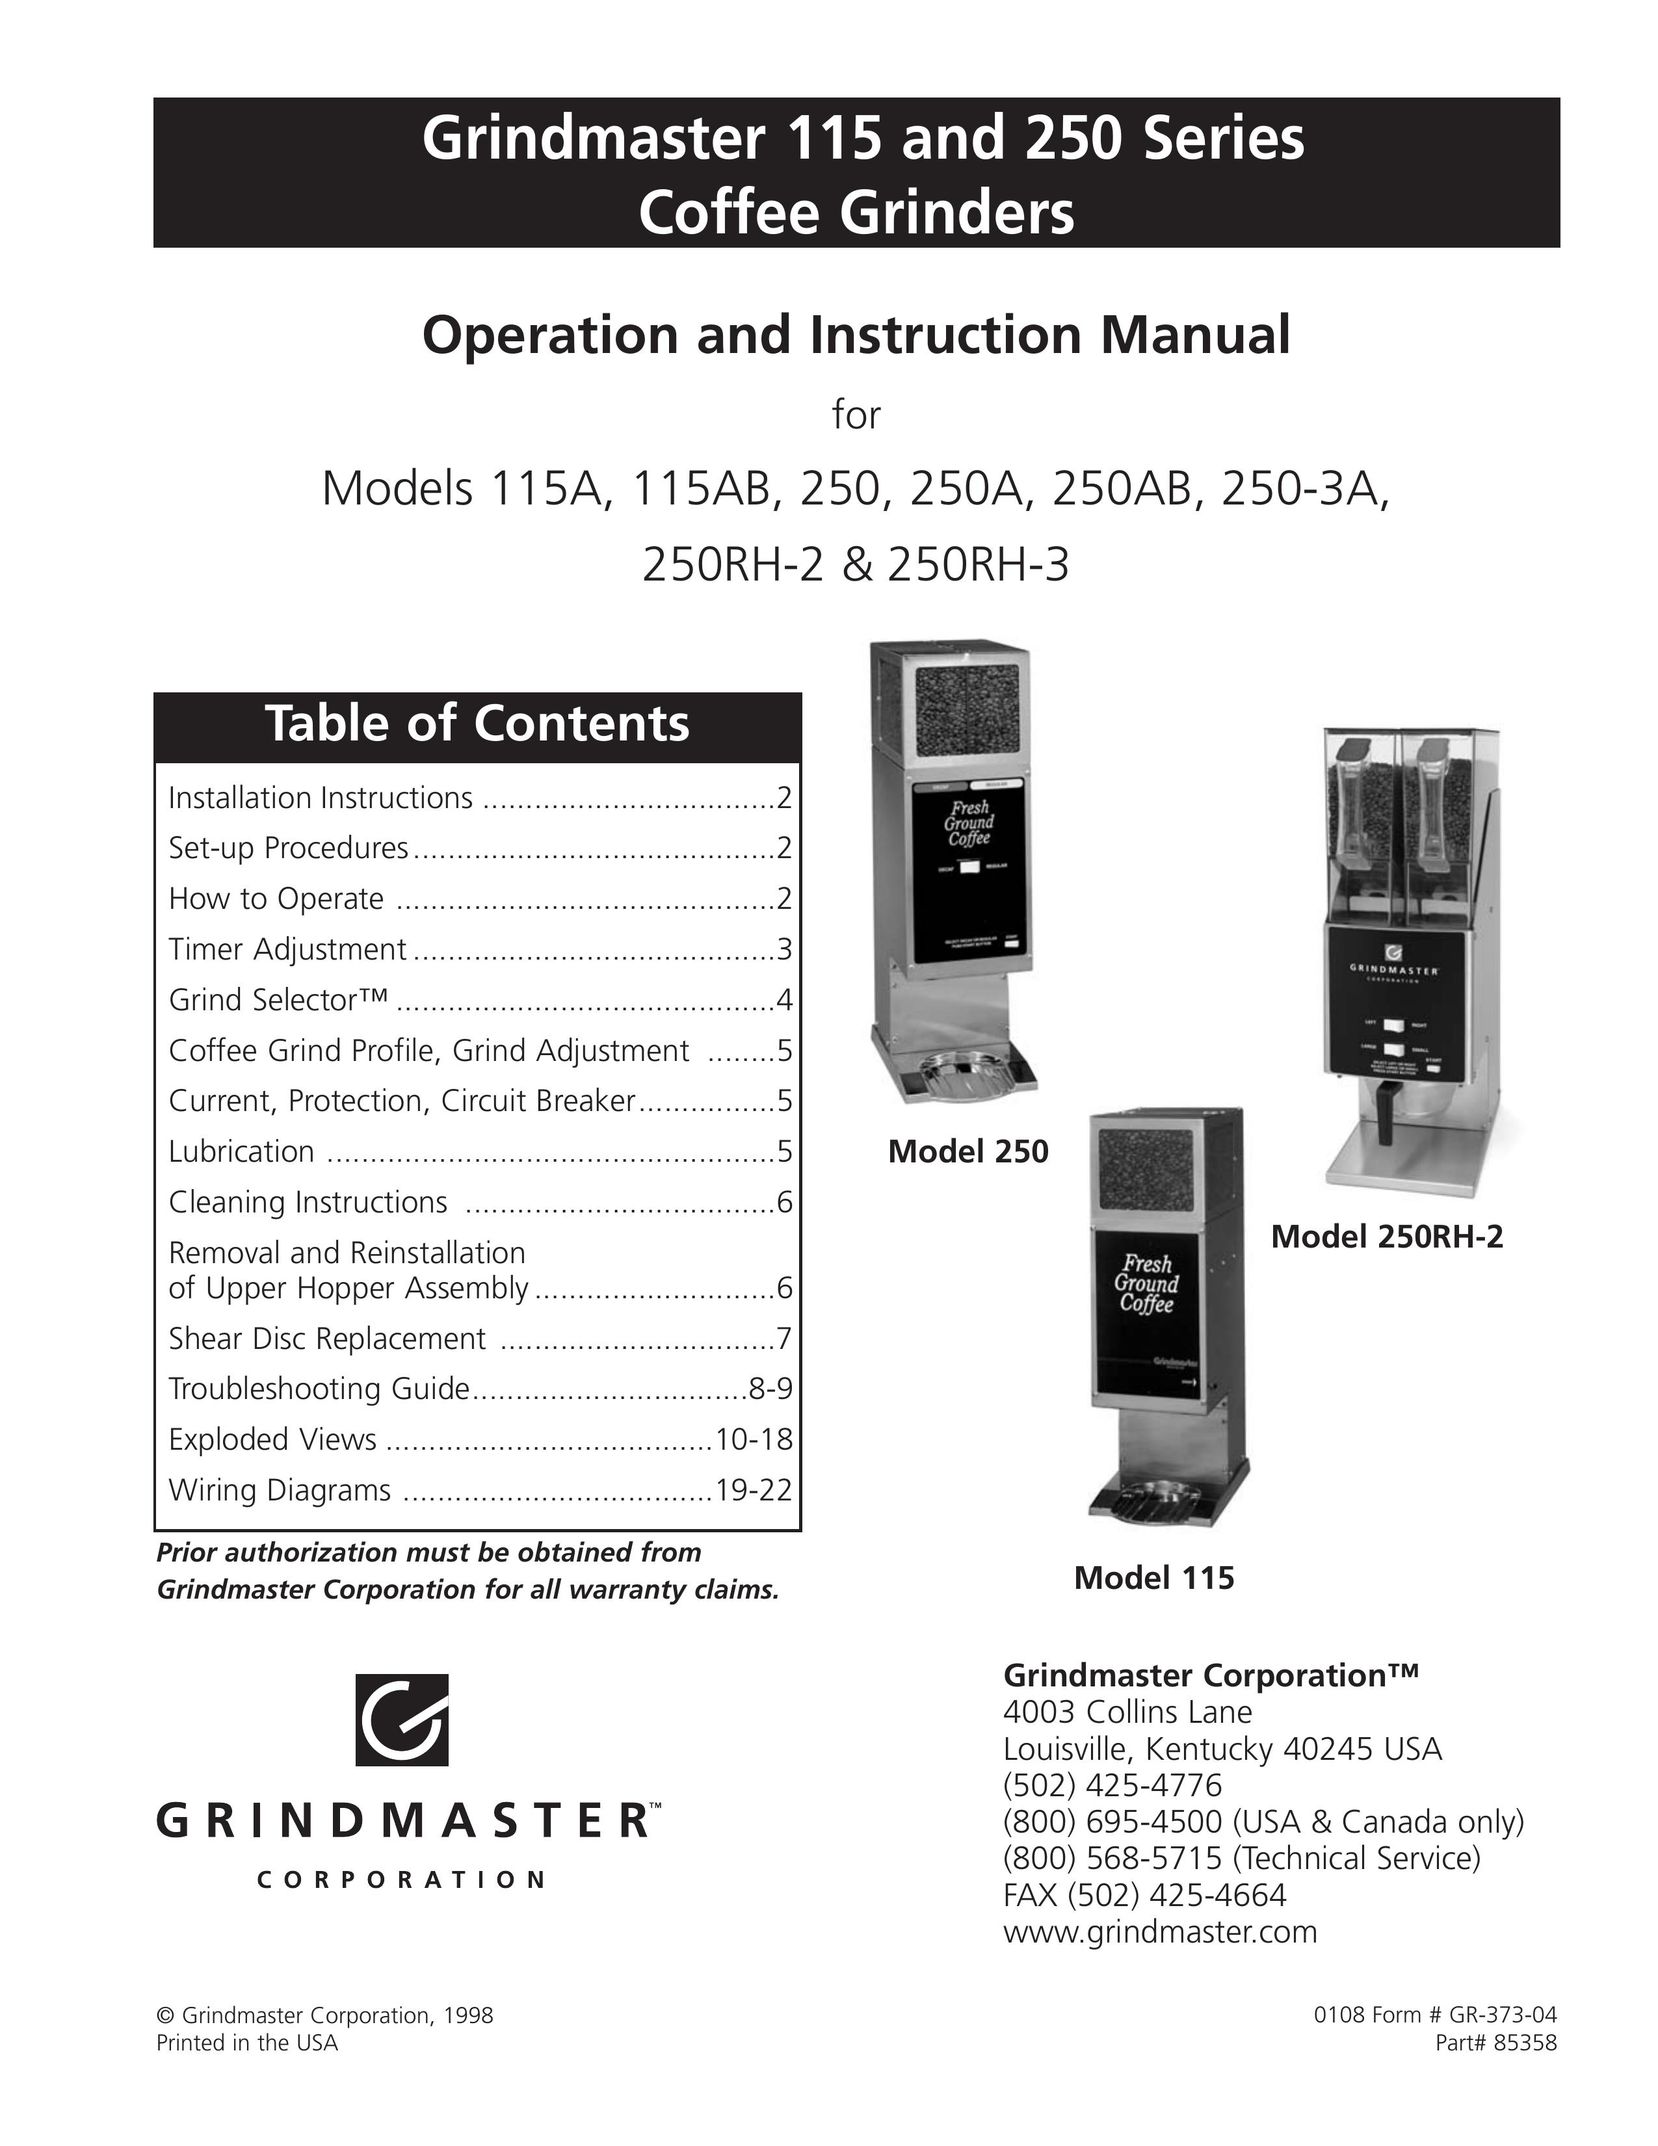 Grindmaster 250RH-3 Coffee Grinder User Manual